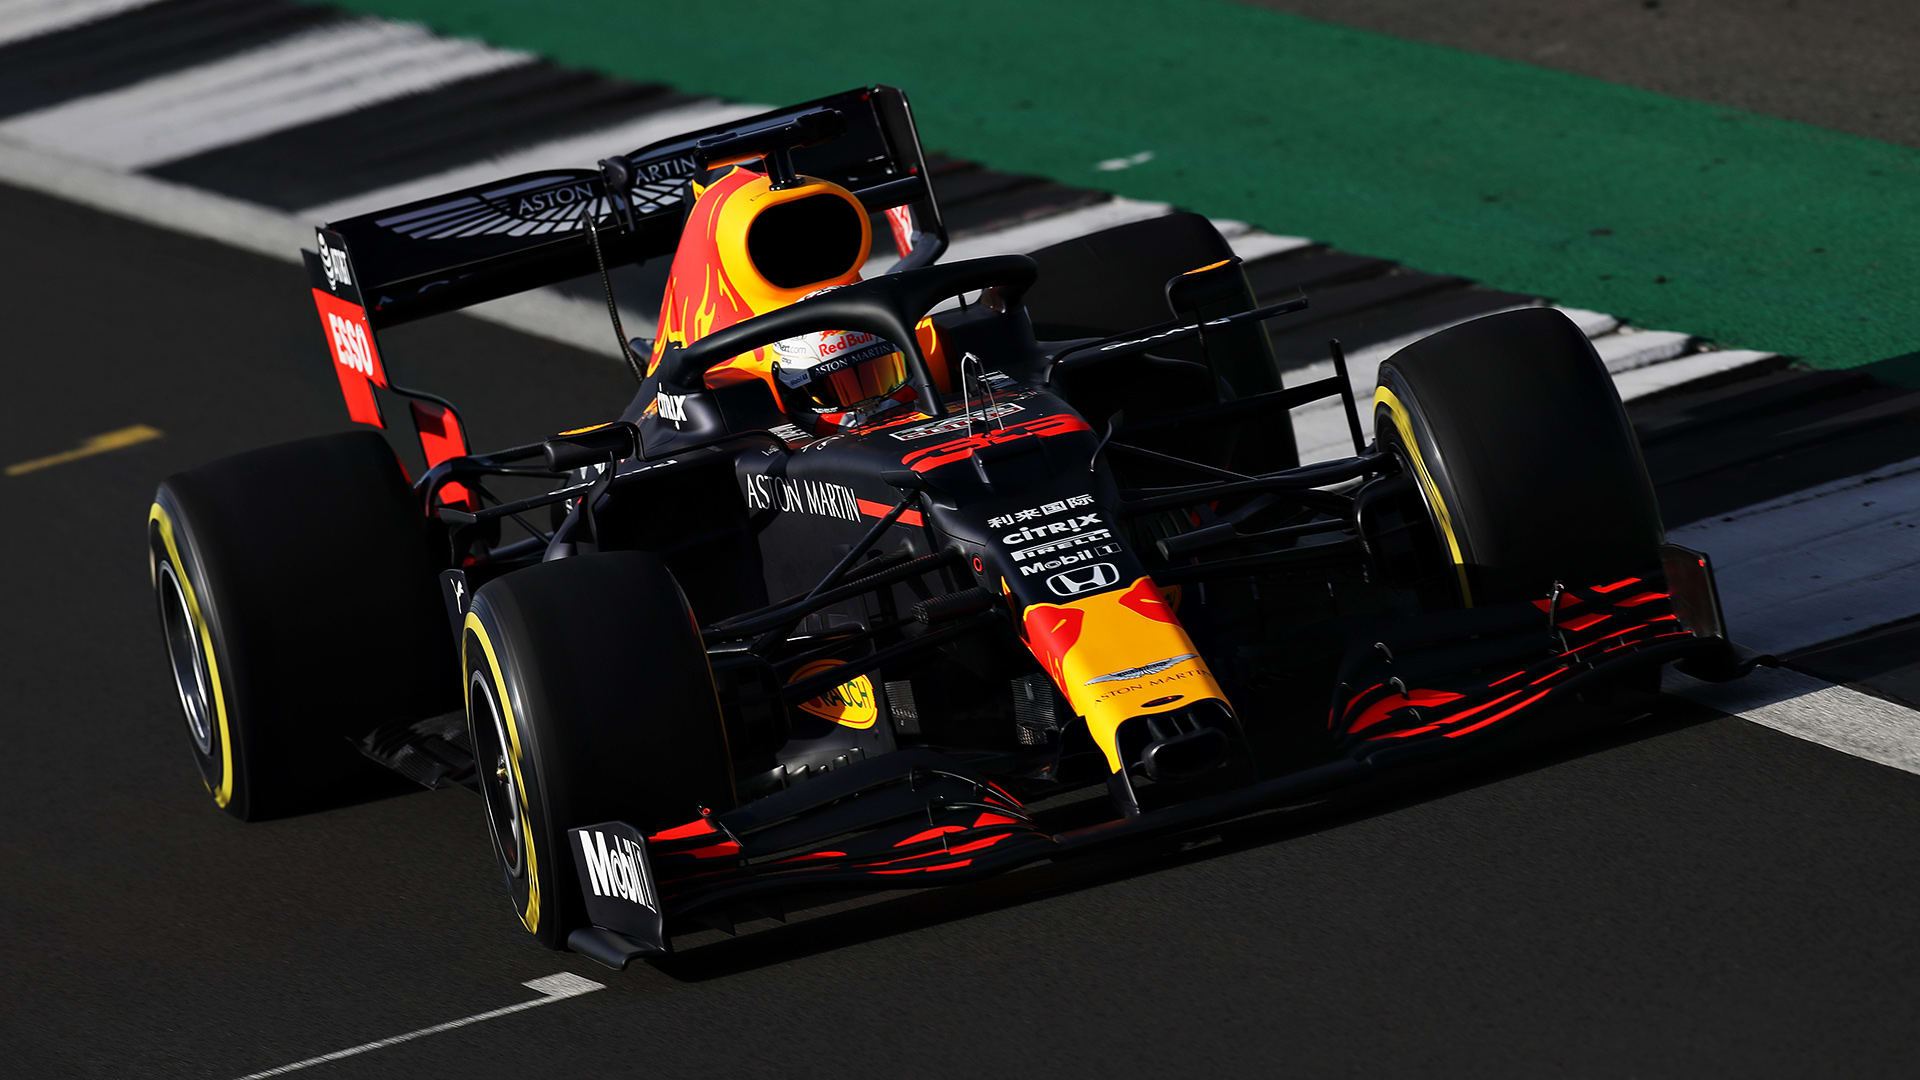 F1 Red Bull 2020 Wallpaper - FIA Formula One Live Streaming